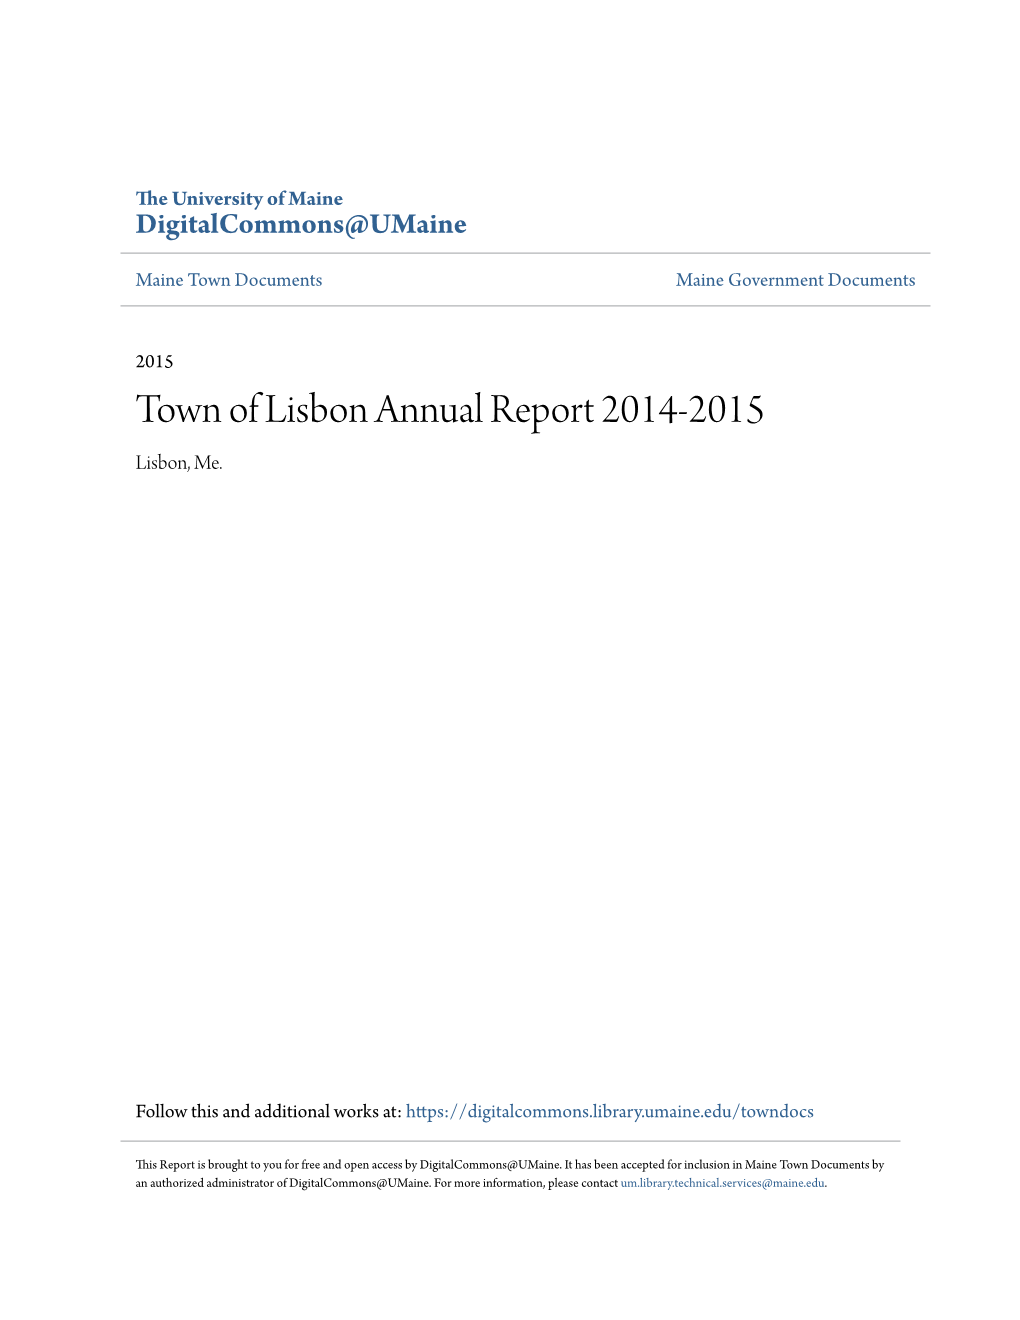 Town of Lisbon Annual Report 2014-2015 Lisbon, Me